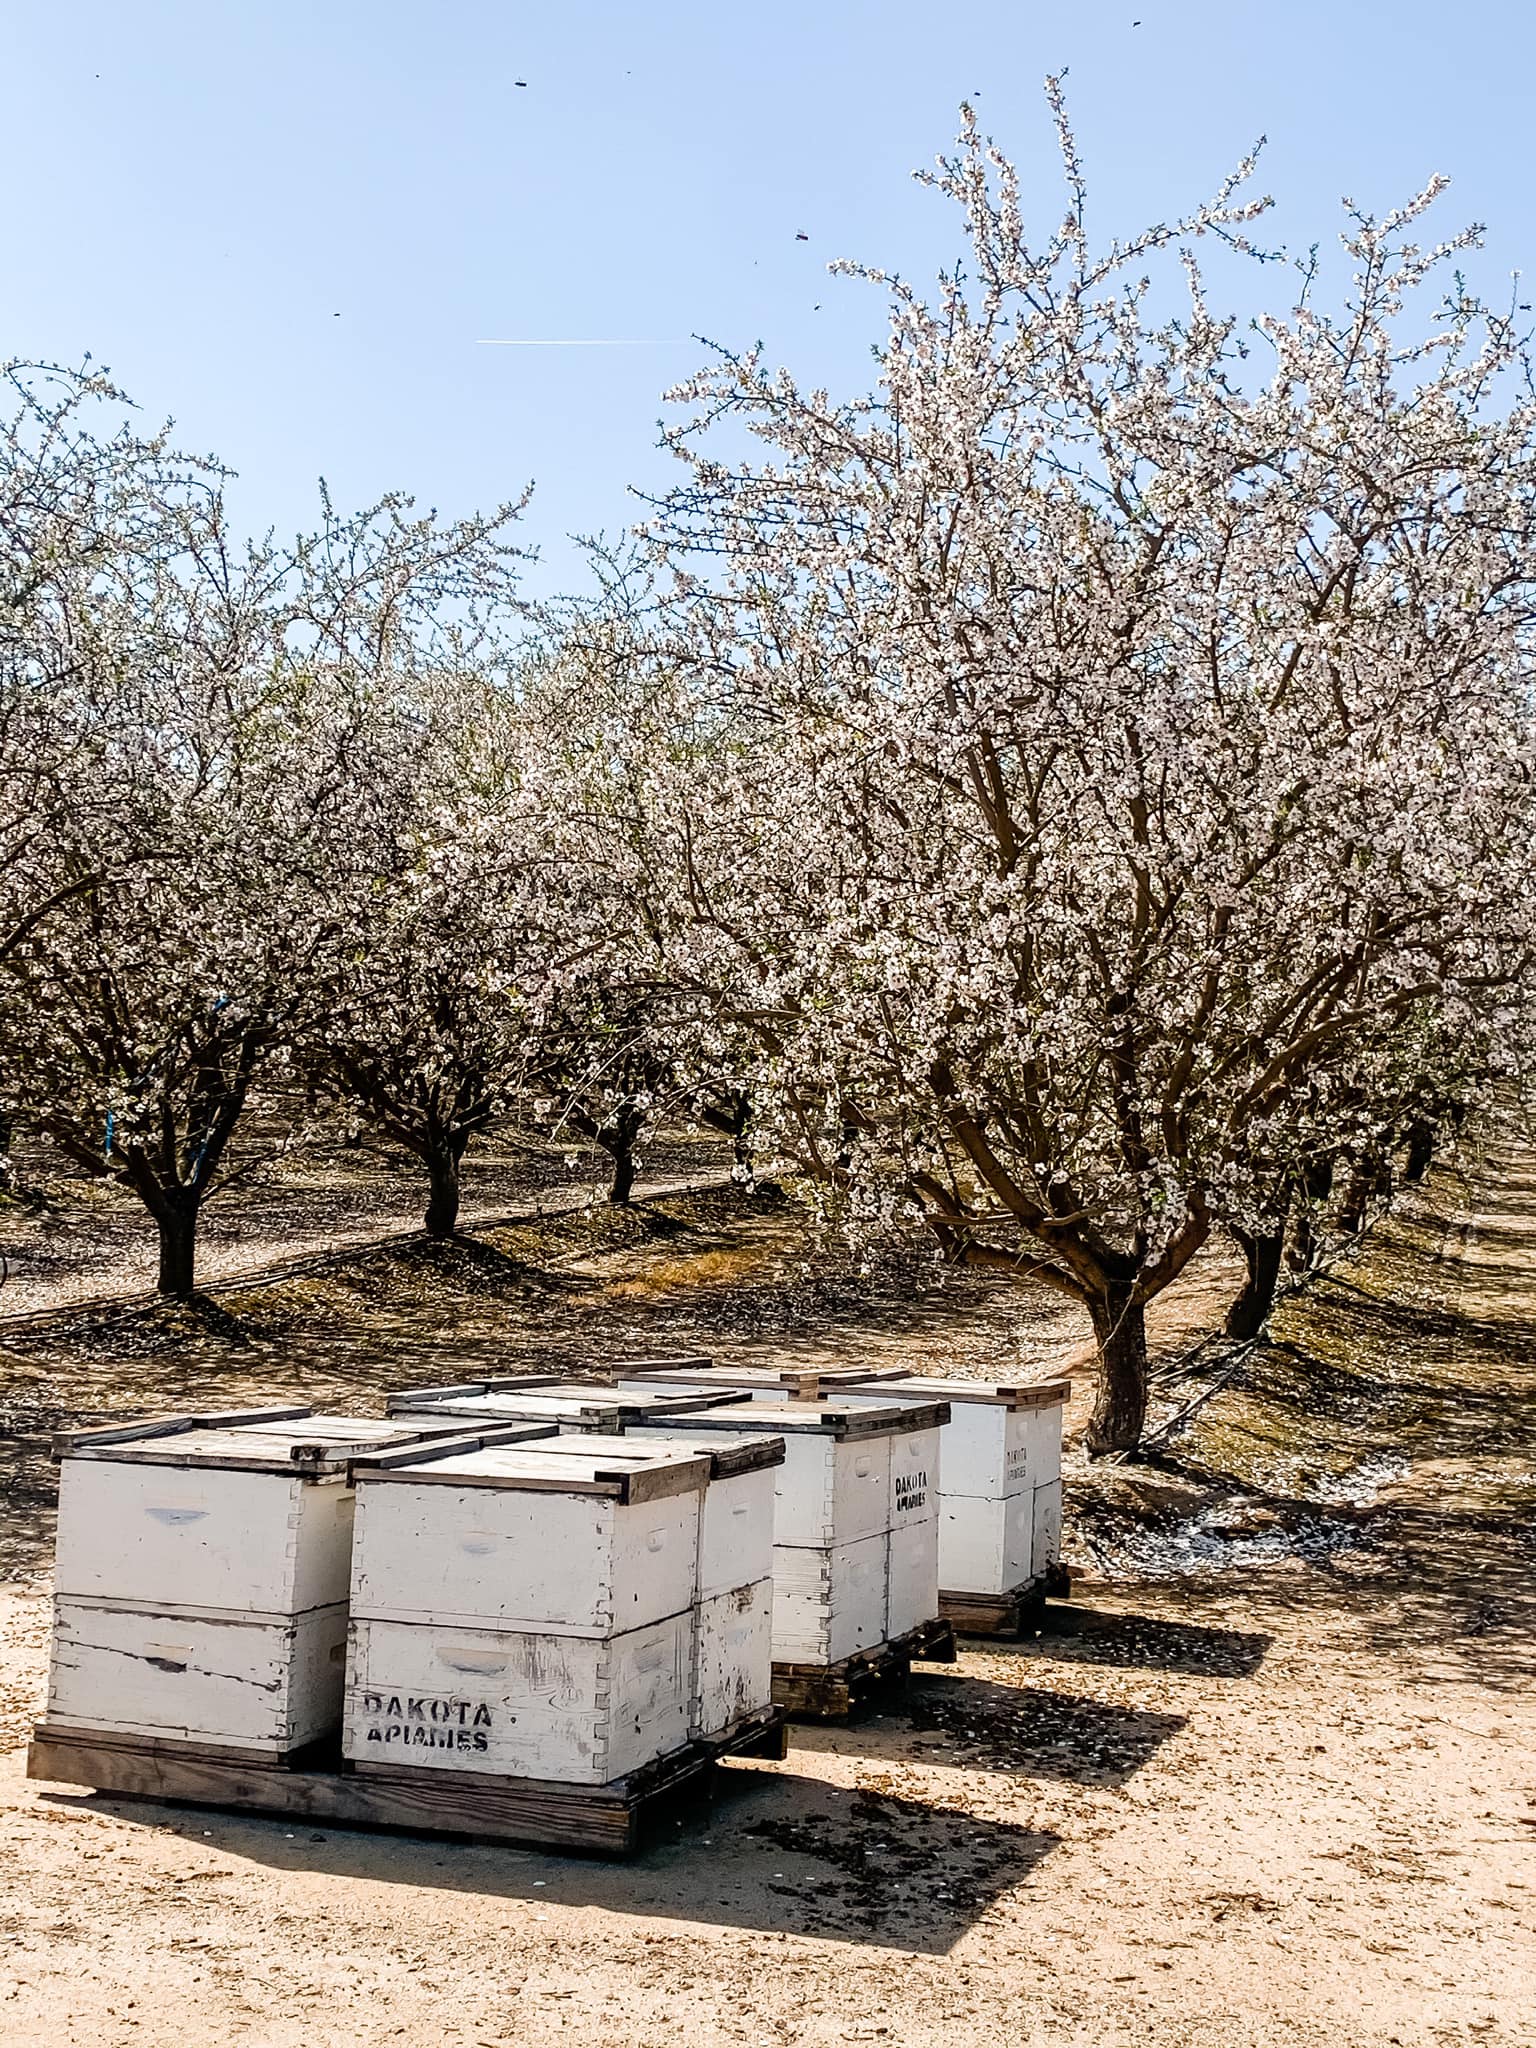 Dakota Honey bee hives in California orchard.